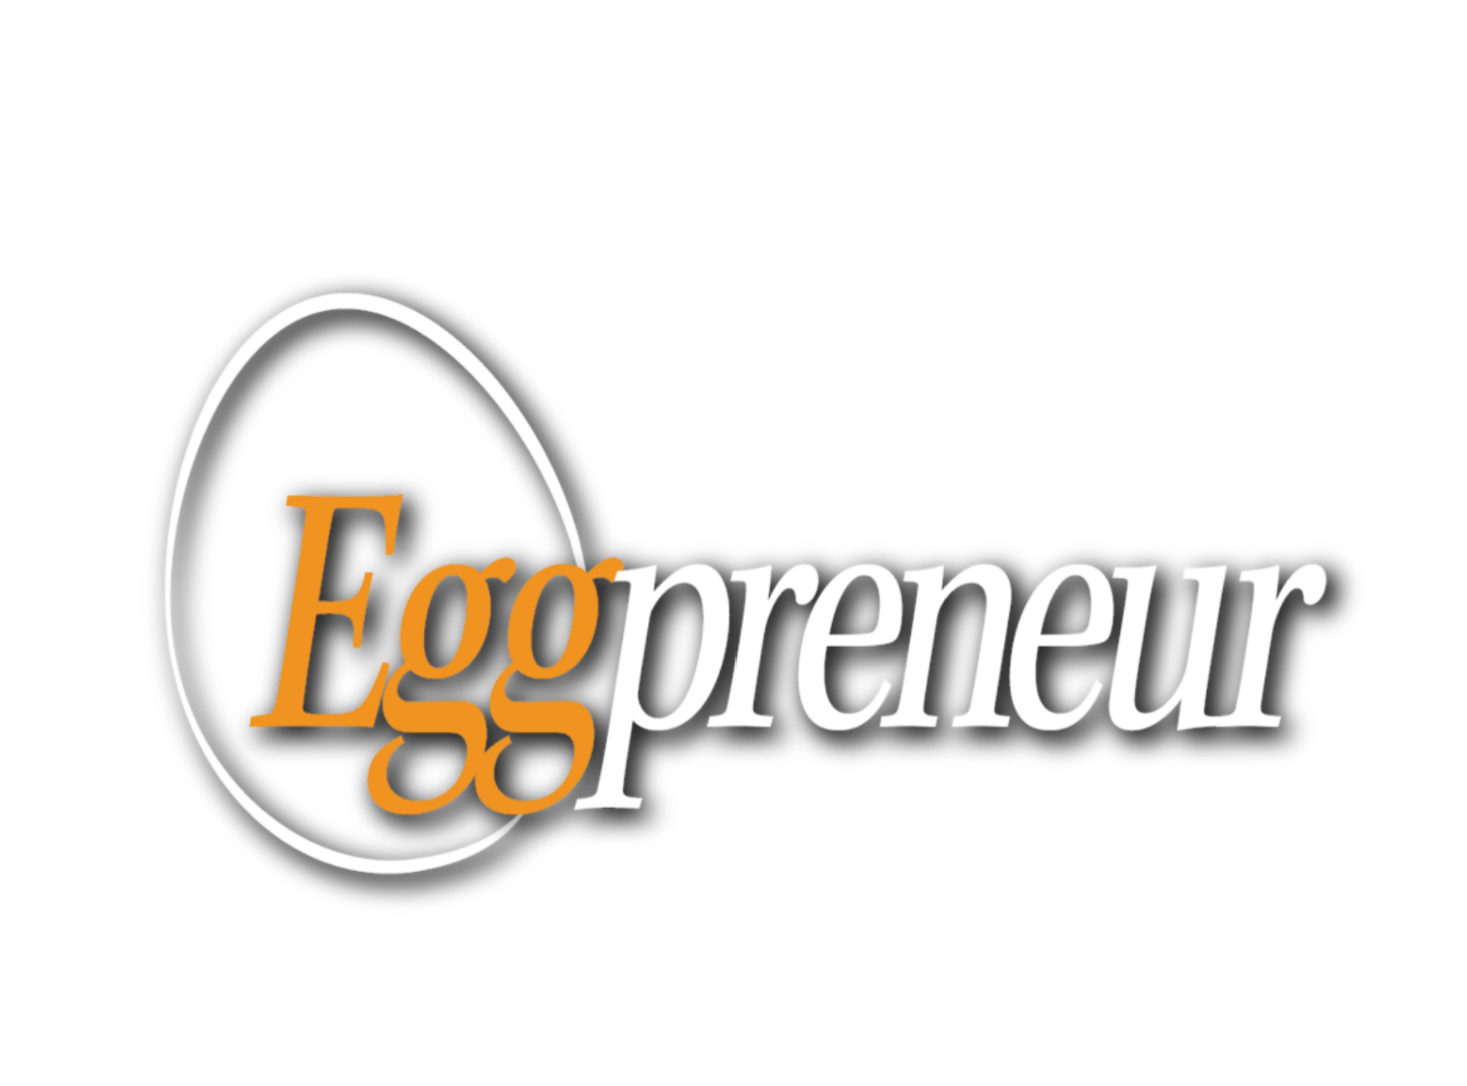 Eggpreneur